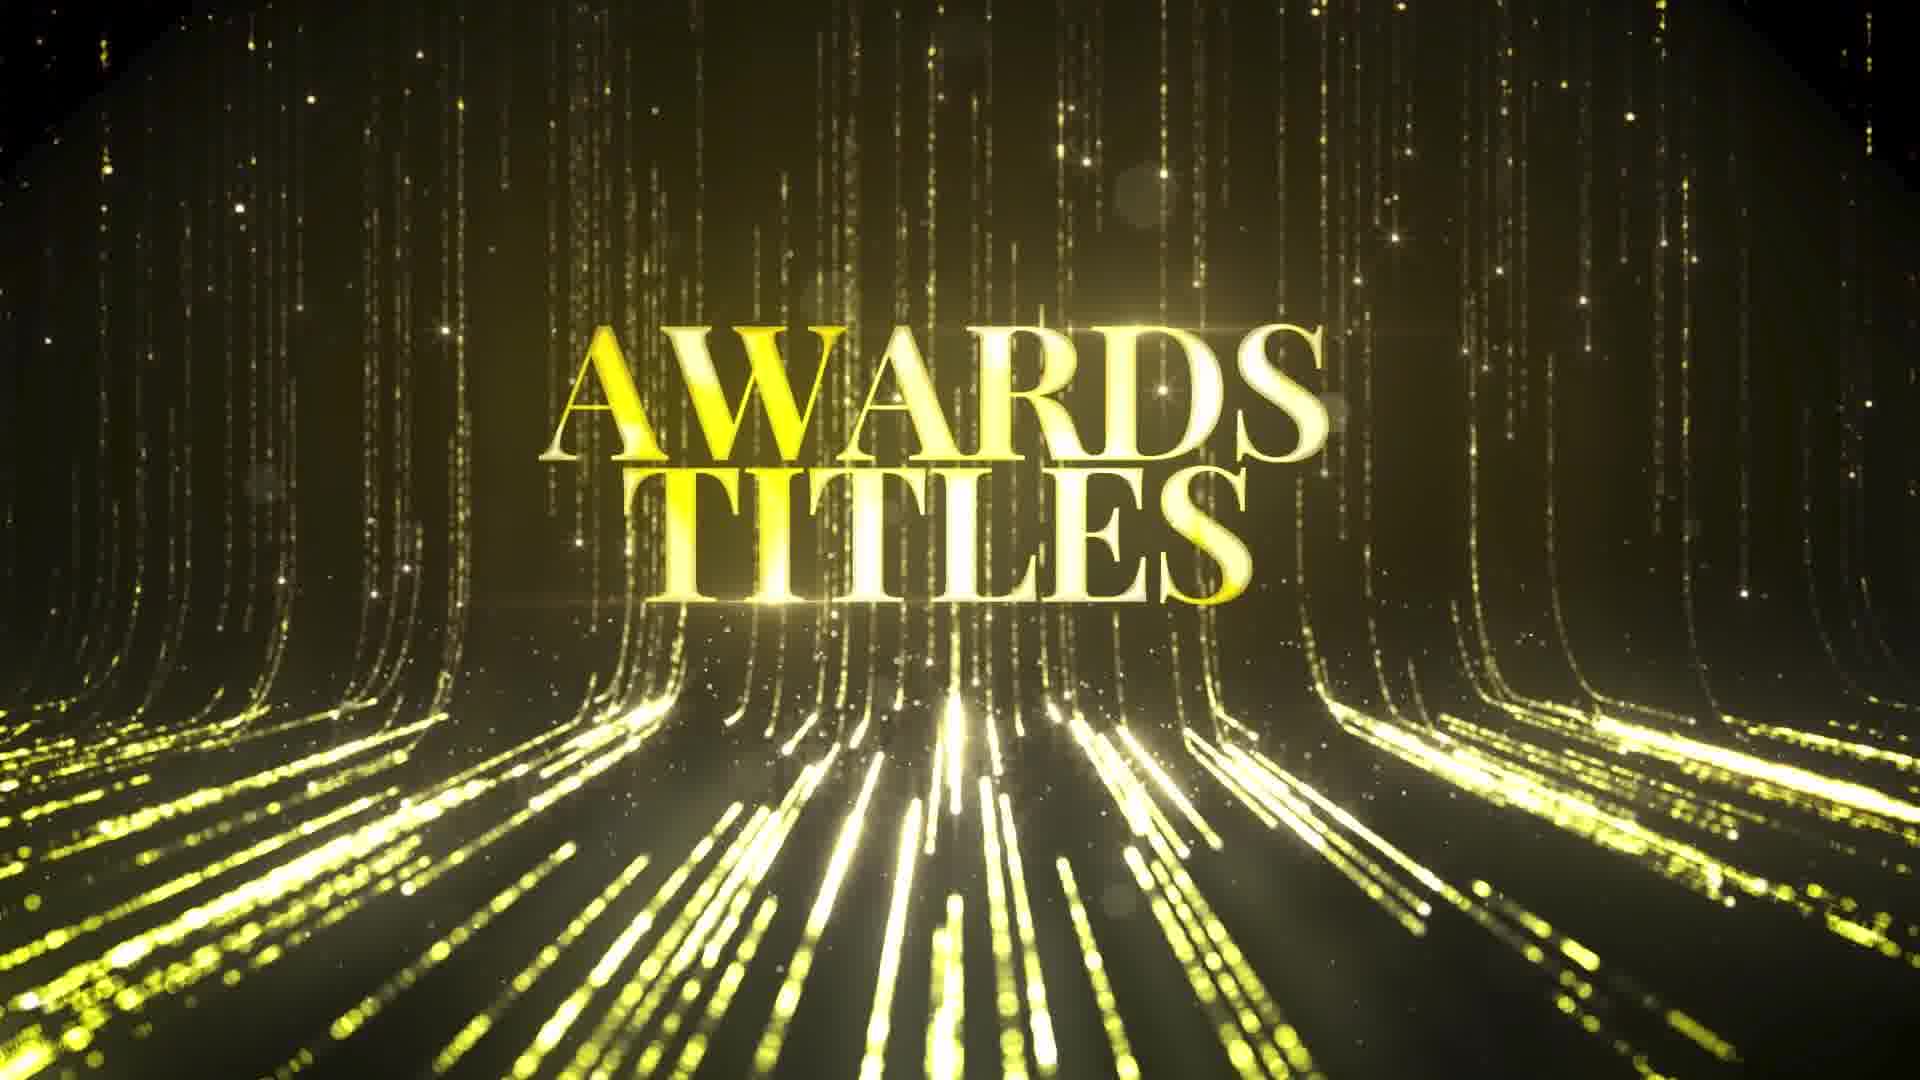 Awards Titles DaVinci Resolve Videohive 33197557 DaVinci Resolve Image 13